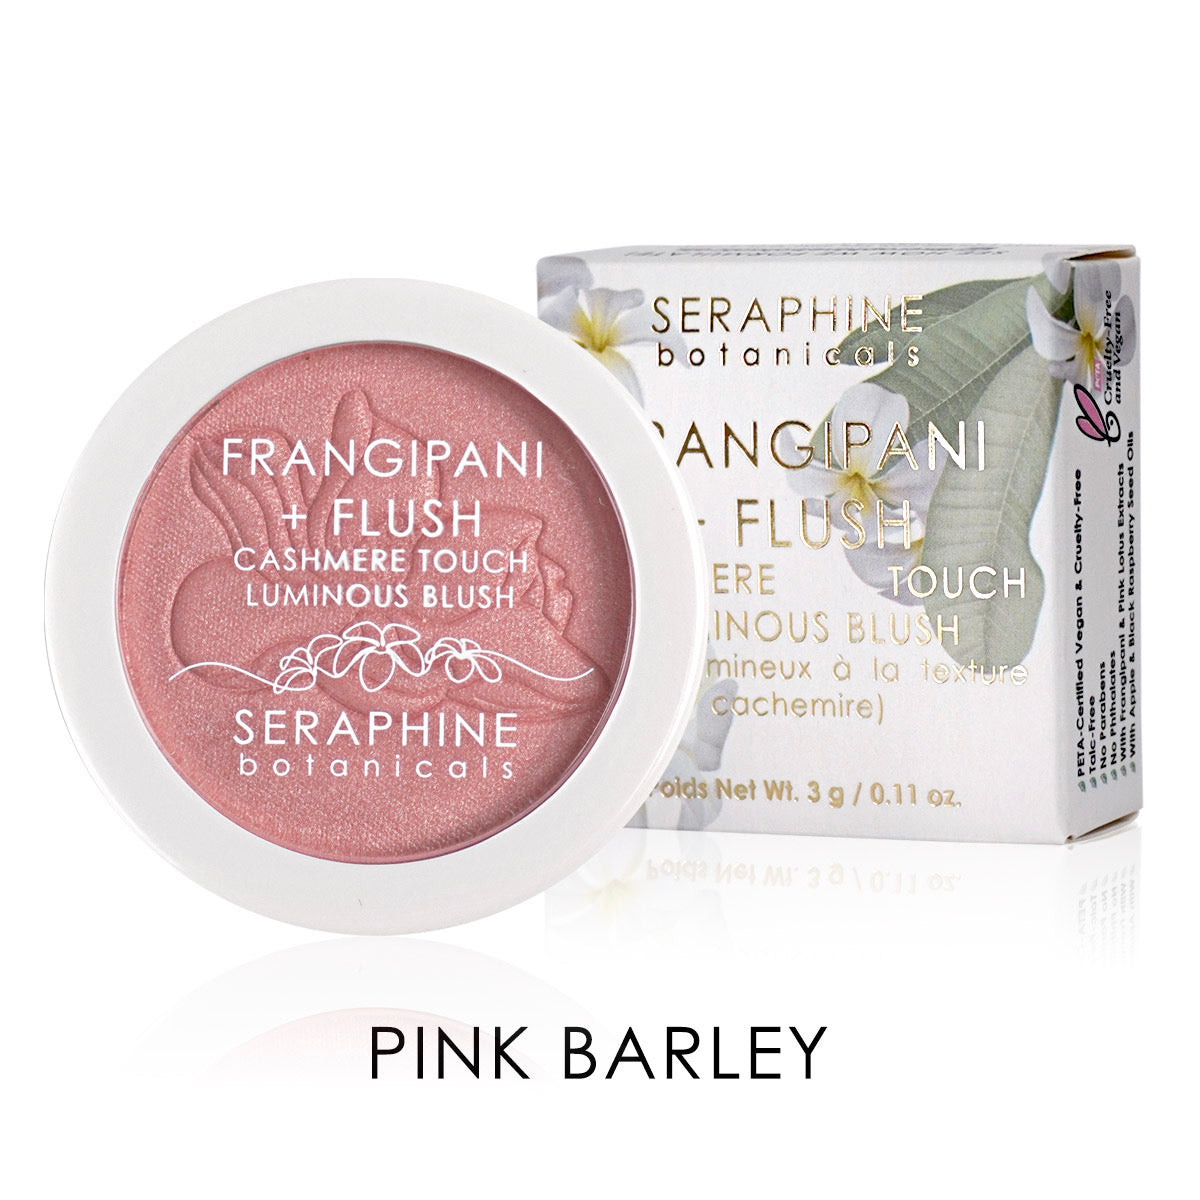 Frangipani + Flush - Cashmere Touch Luminous Blush – Seraphine Botanicals